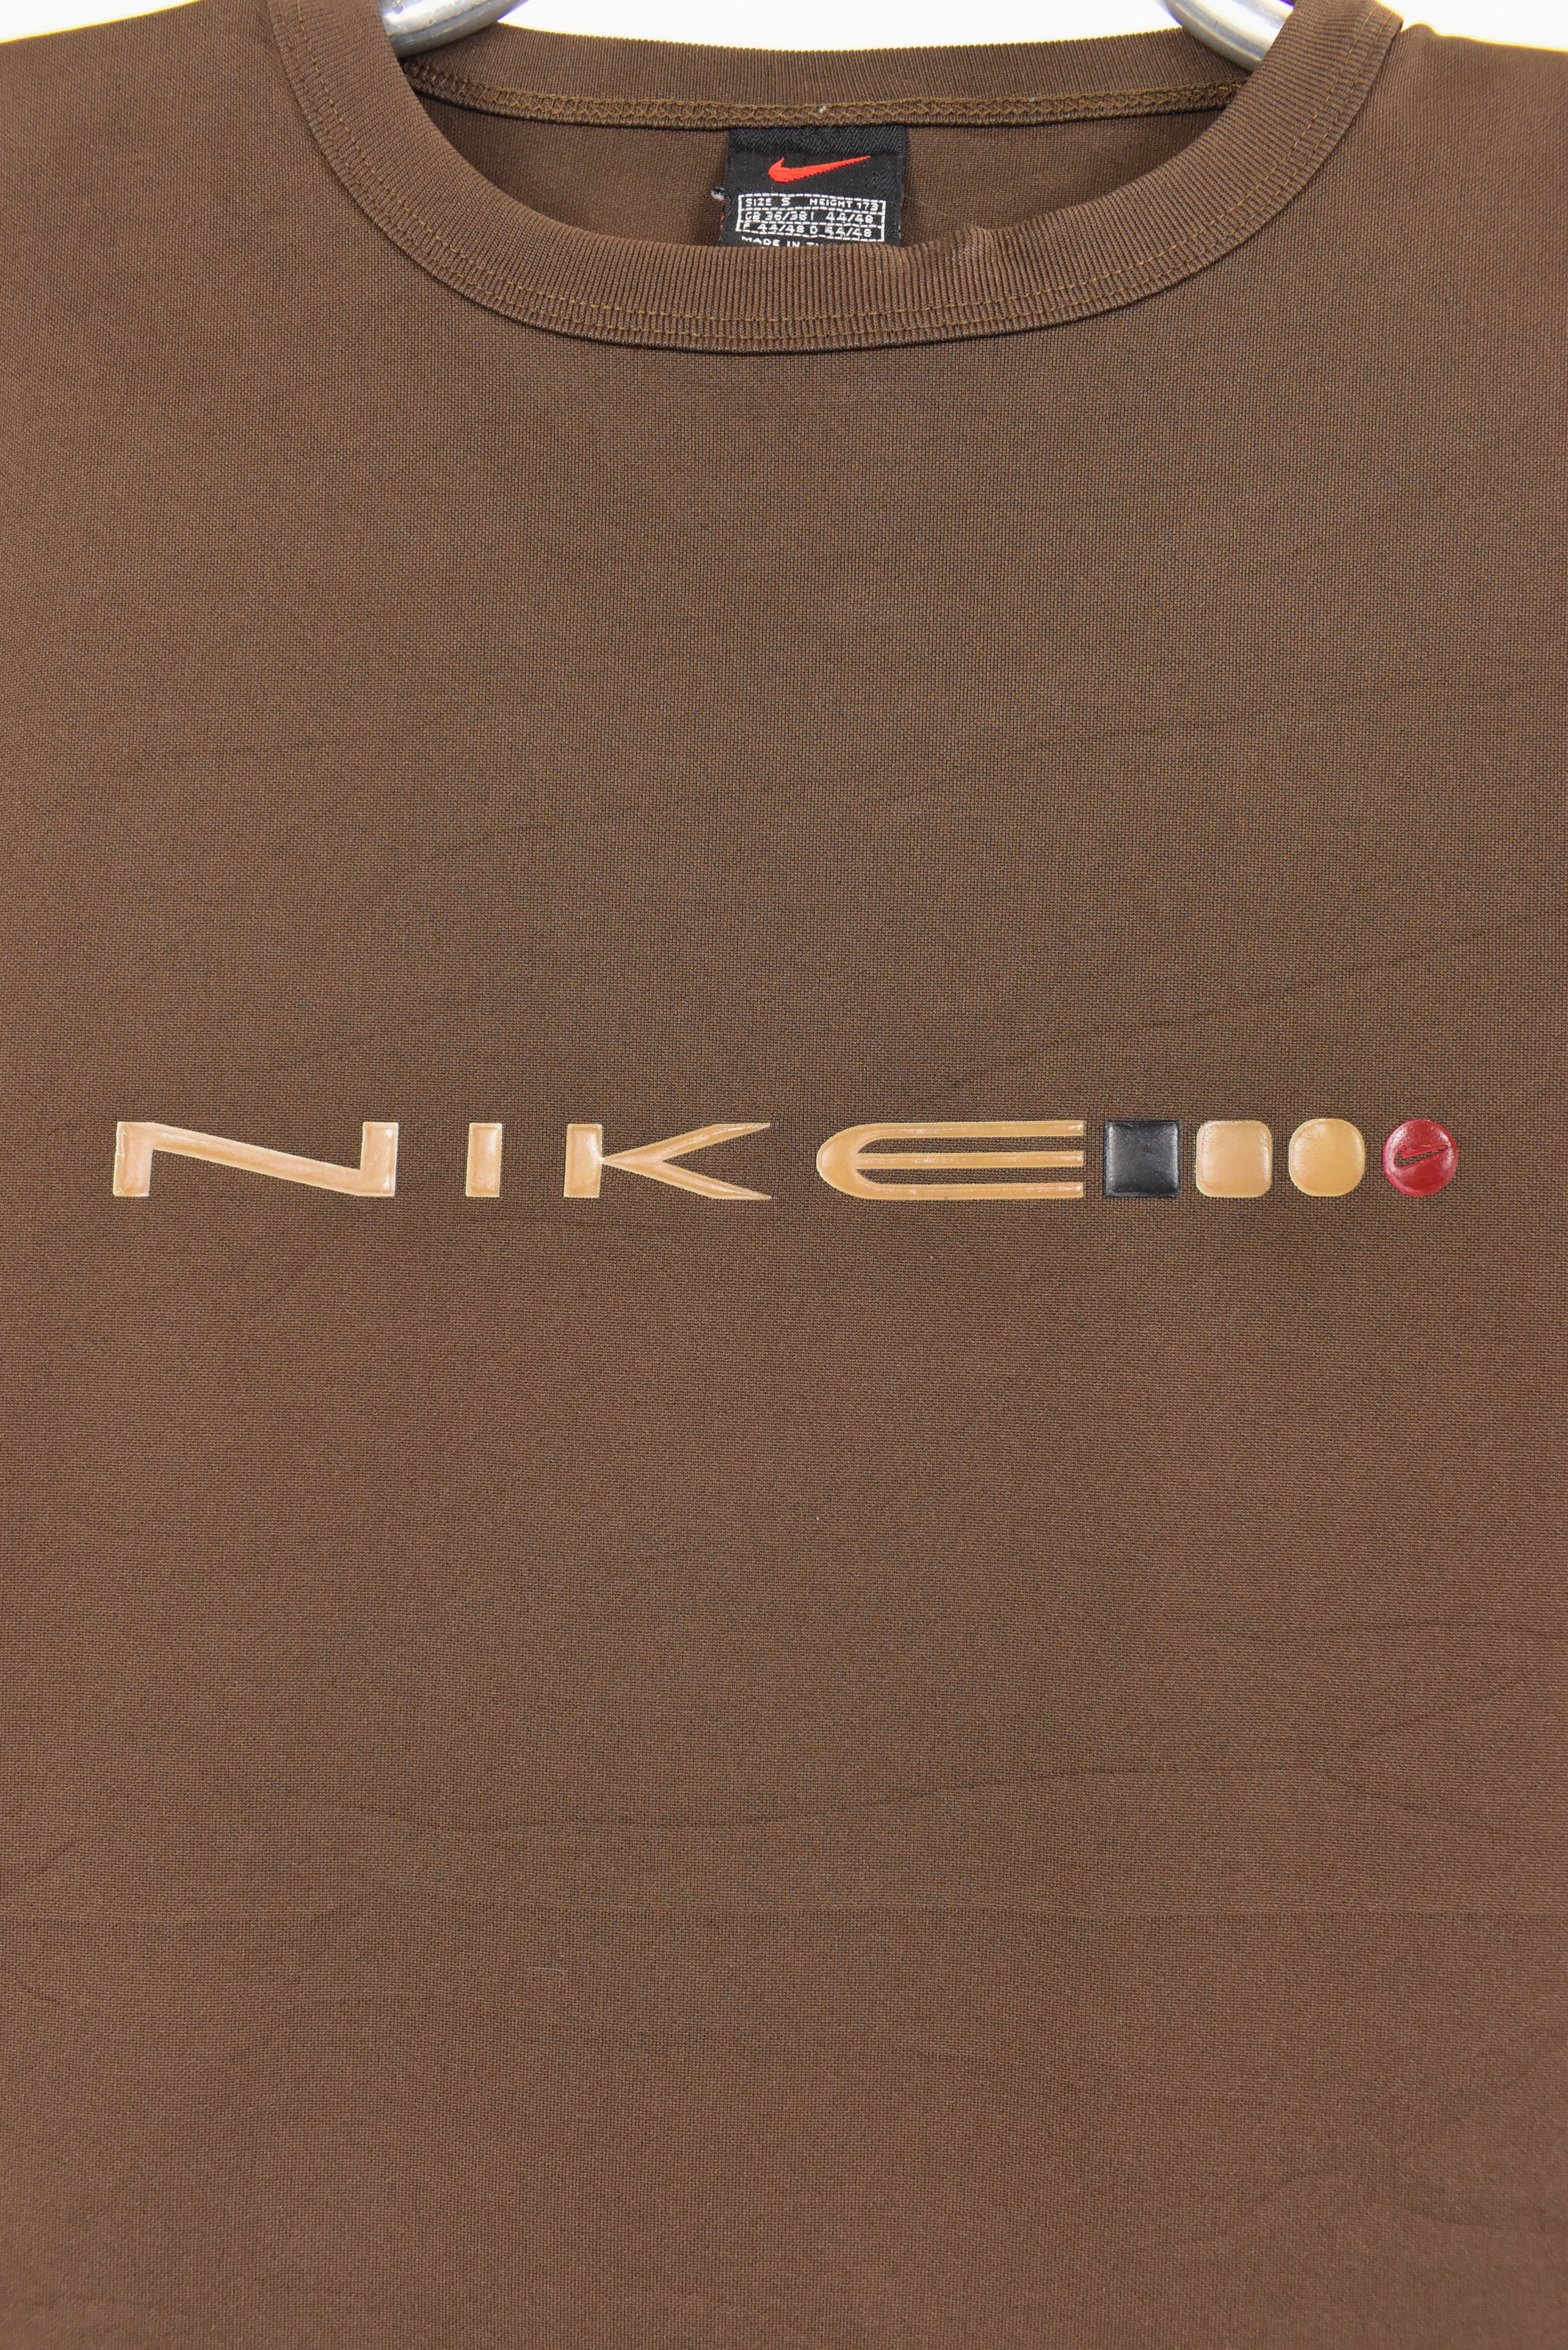 Vintage Nike shirt, athletic brown graphic tee - AU M NIKE